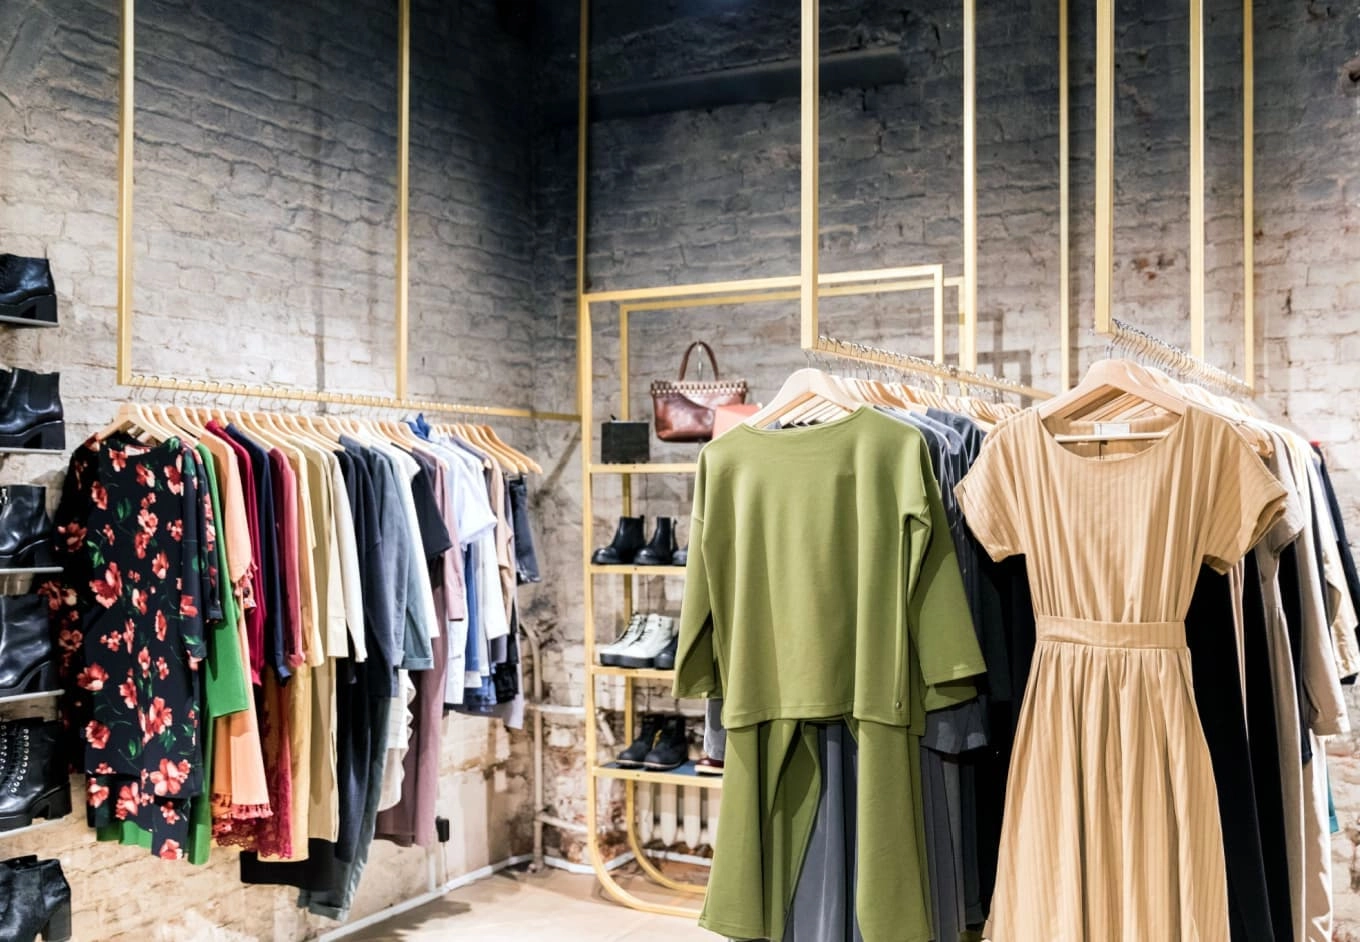 Paris Fashion Shops - Wholesale clothing Marketplace